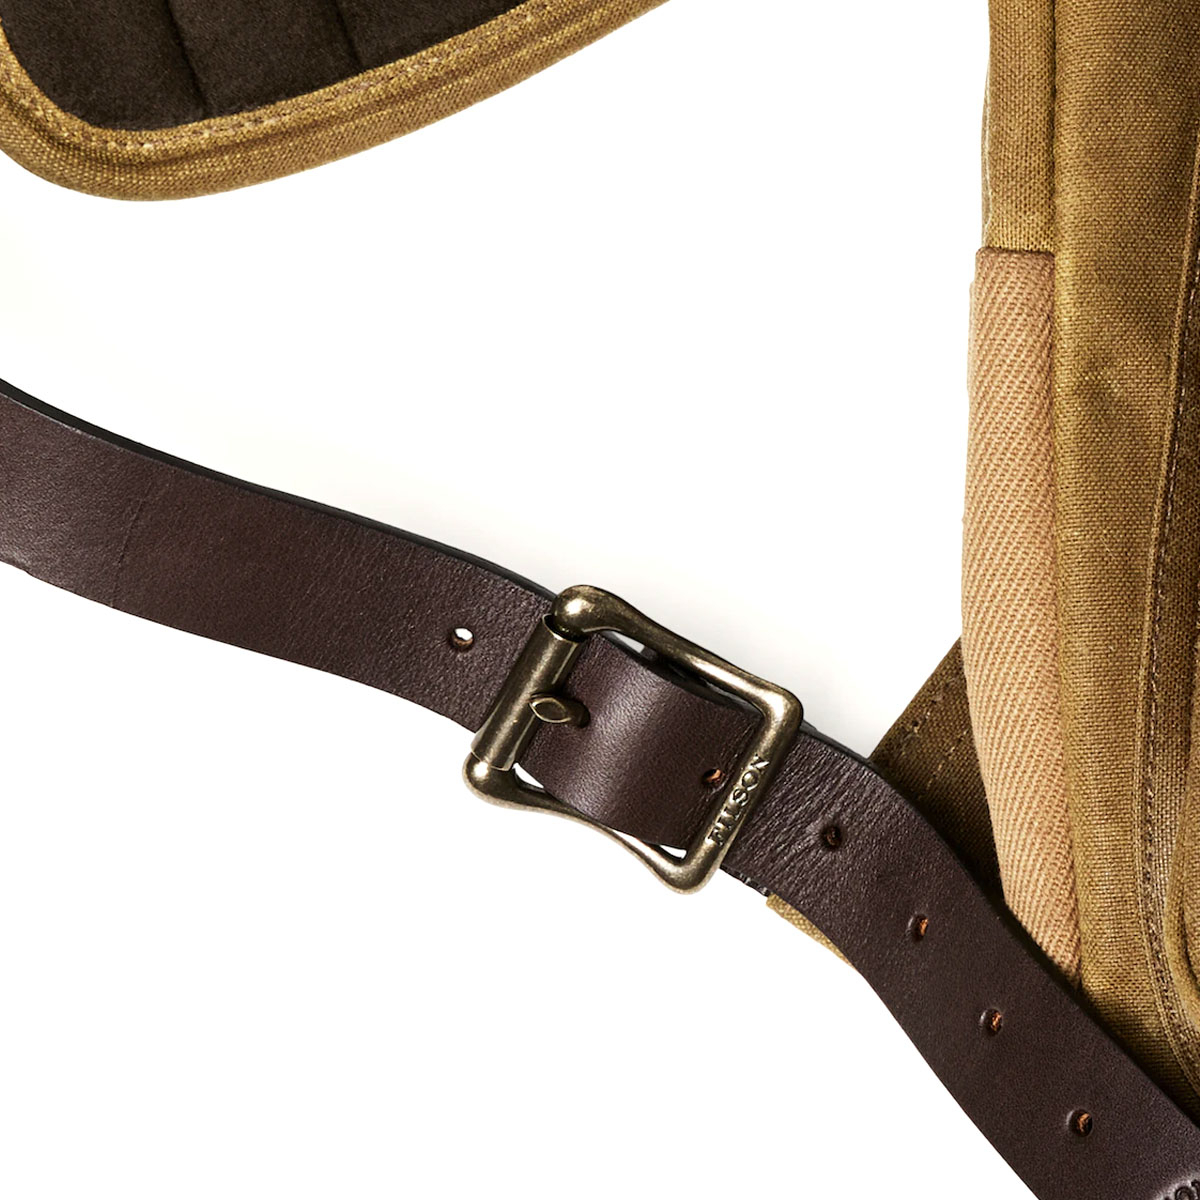 Journeyman Leather Belt